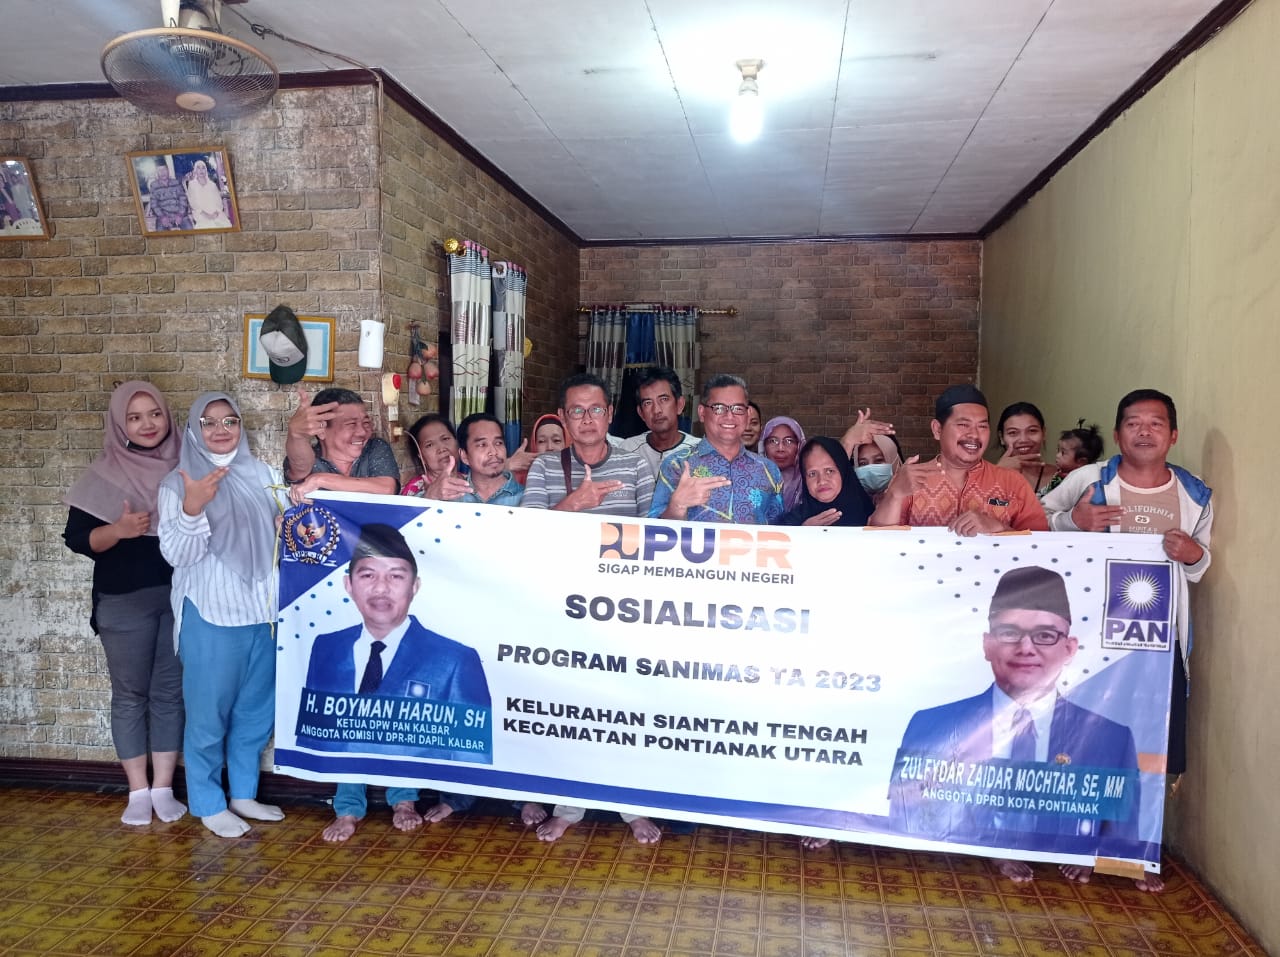 Foto bersama warga dan peserta sosialisasi program sanimas di Kelurahan Siantan Tengah, Selasa (11/04/2023). (Foto: Jauhari)